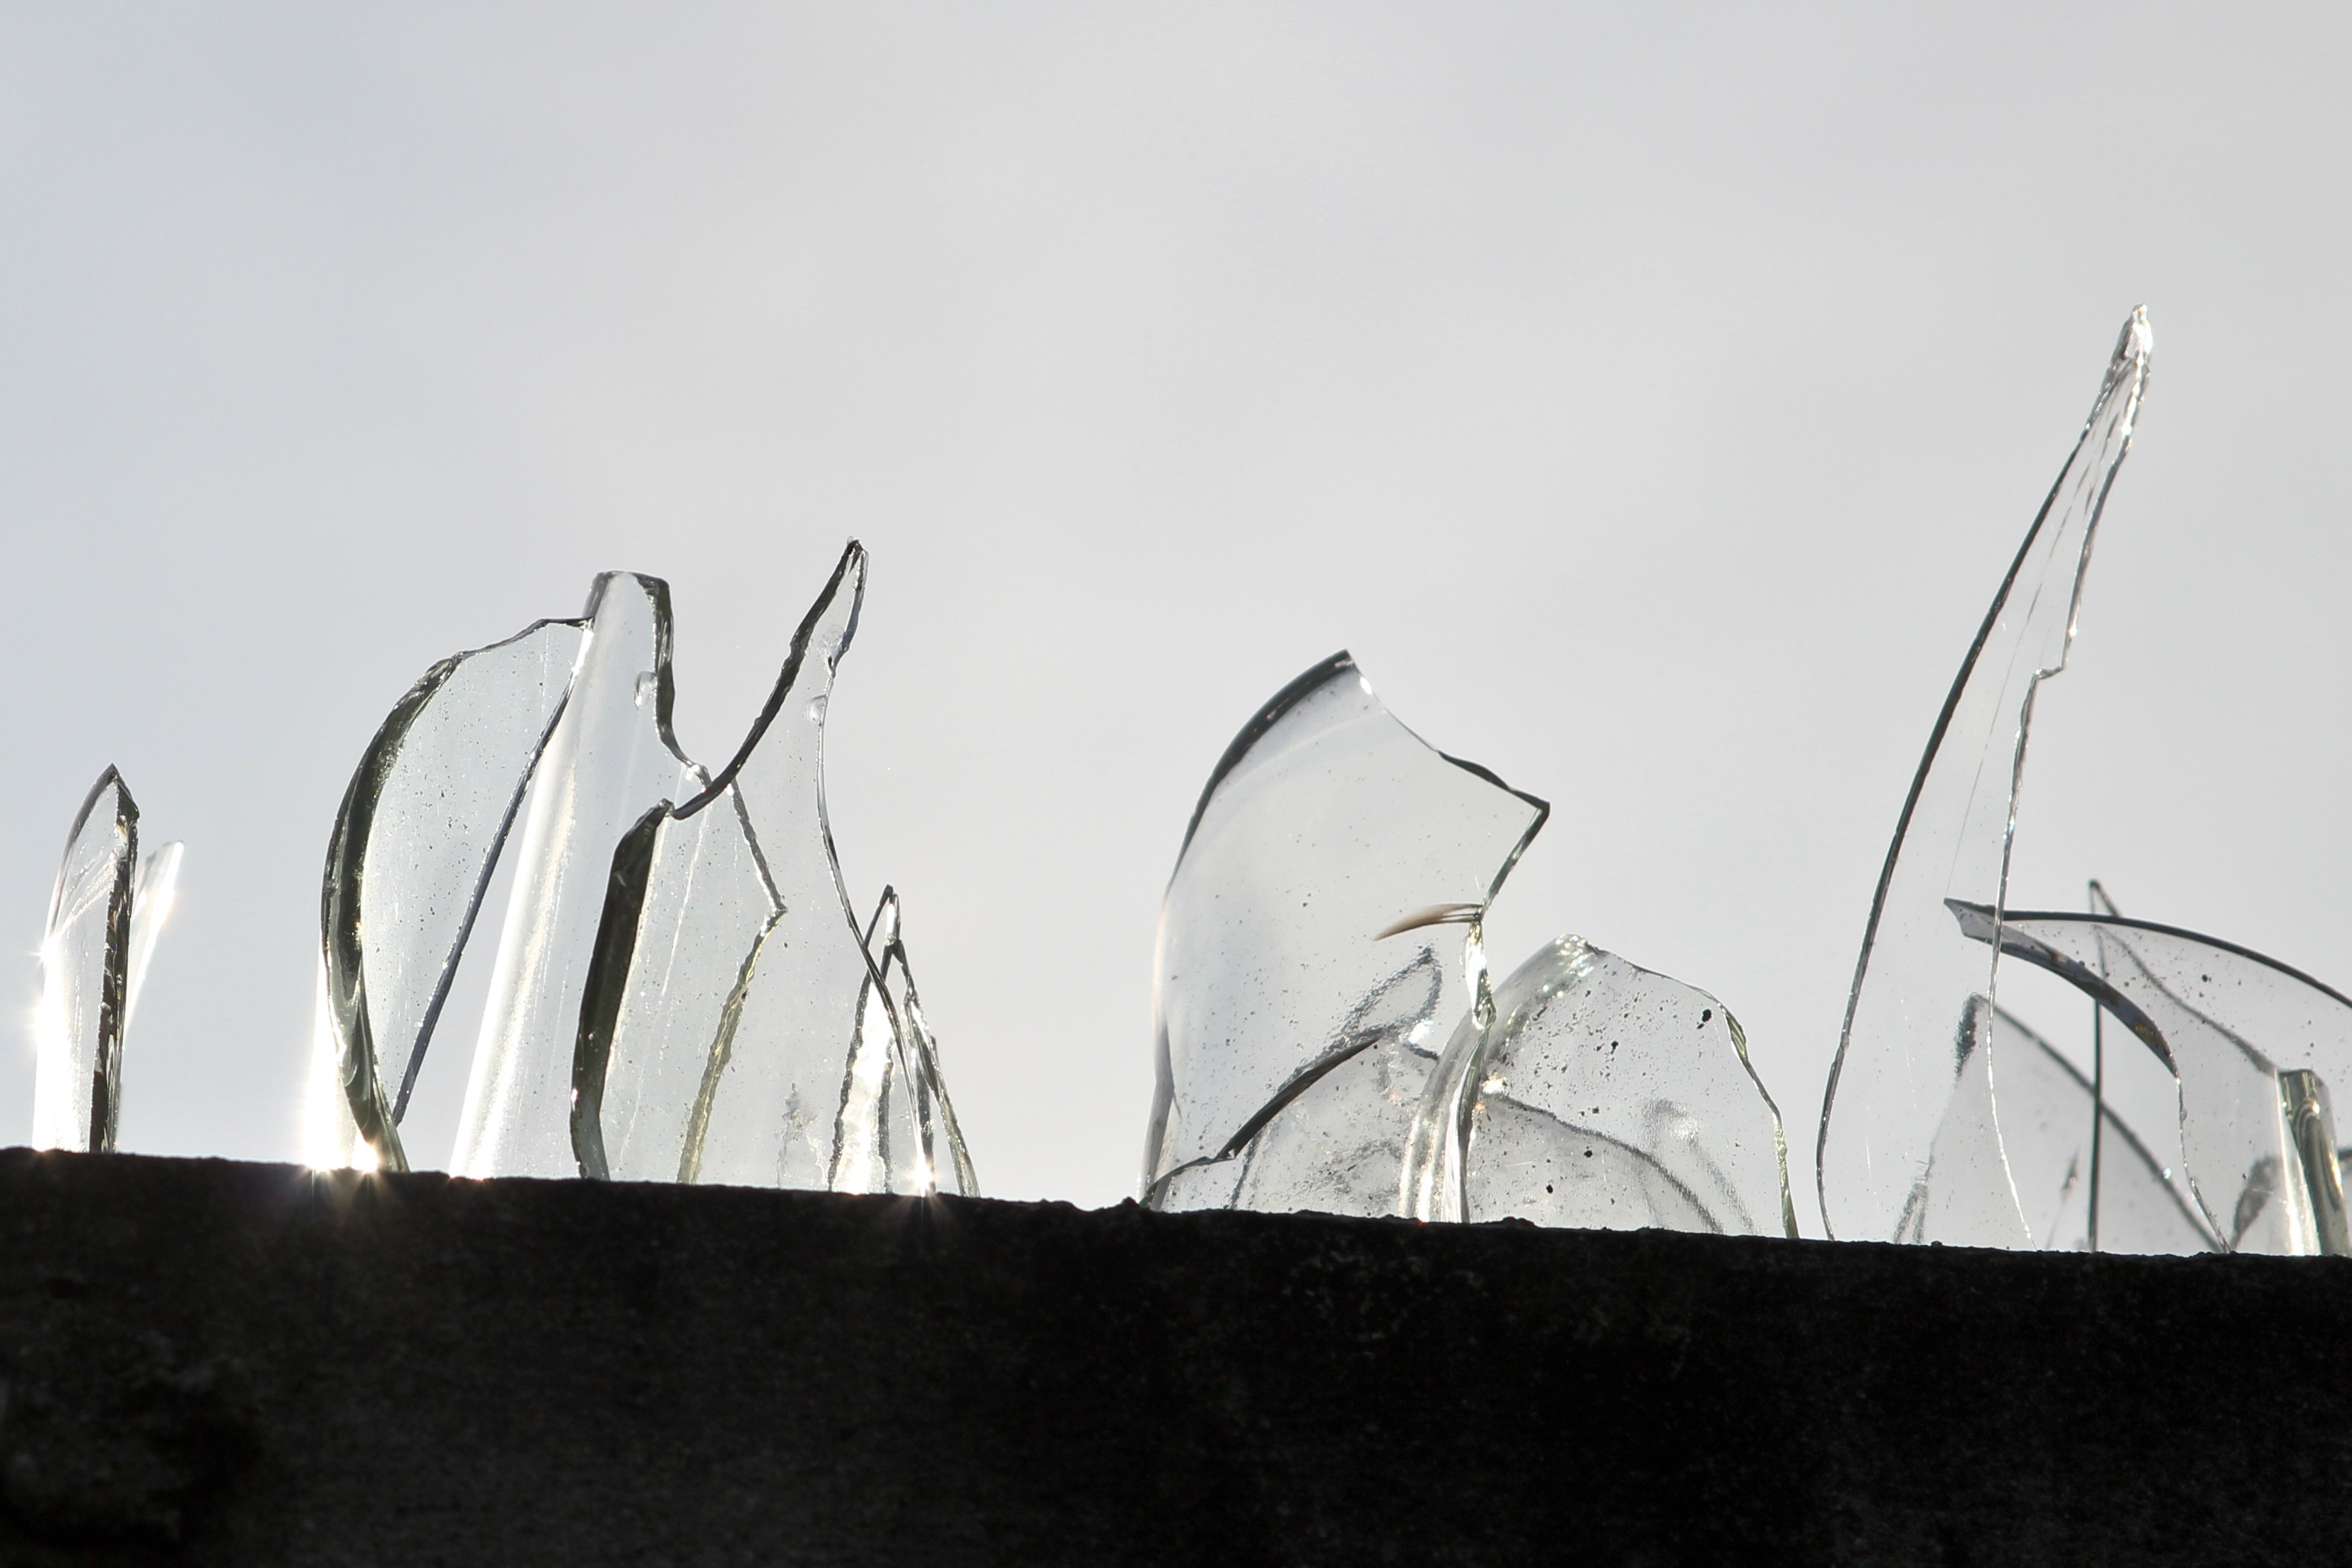 Broken Glass Shattered Crack Abstract Window Bokeh Pattern